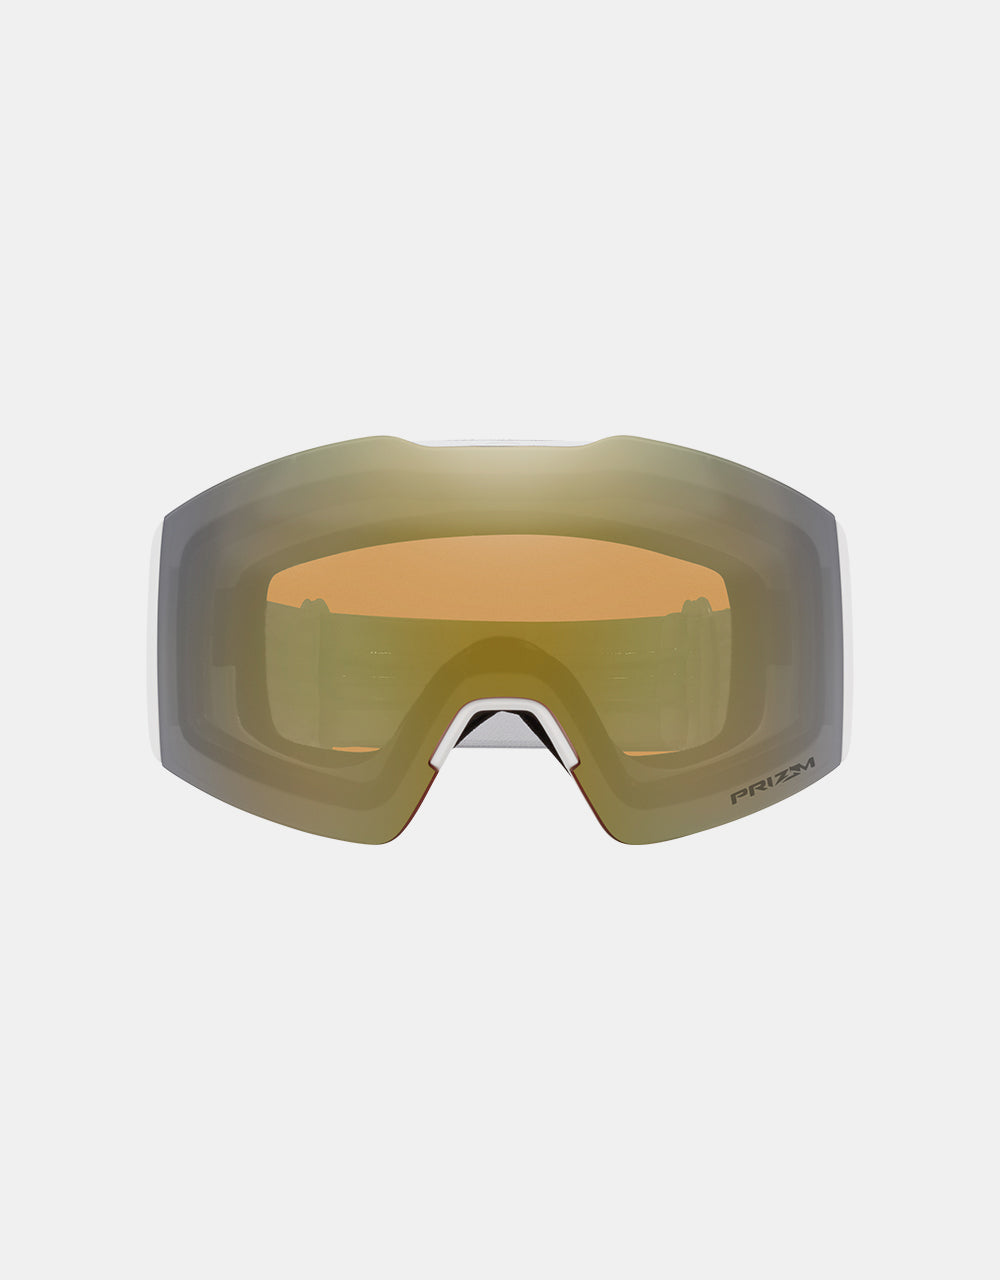 Oakley Fall Line M Snowboard Goggles - White Leopard/Prizm Sage Gold Iridium